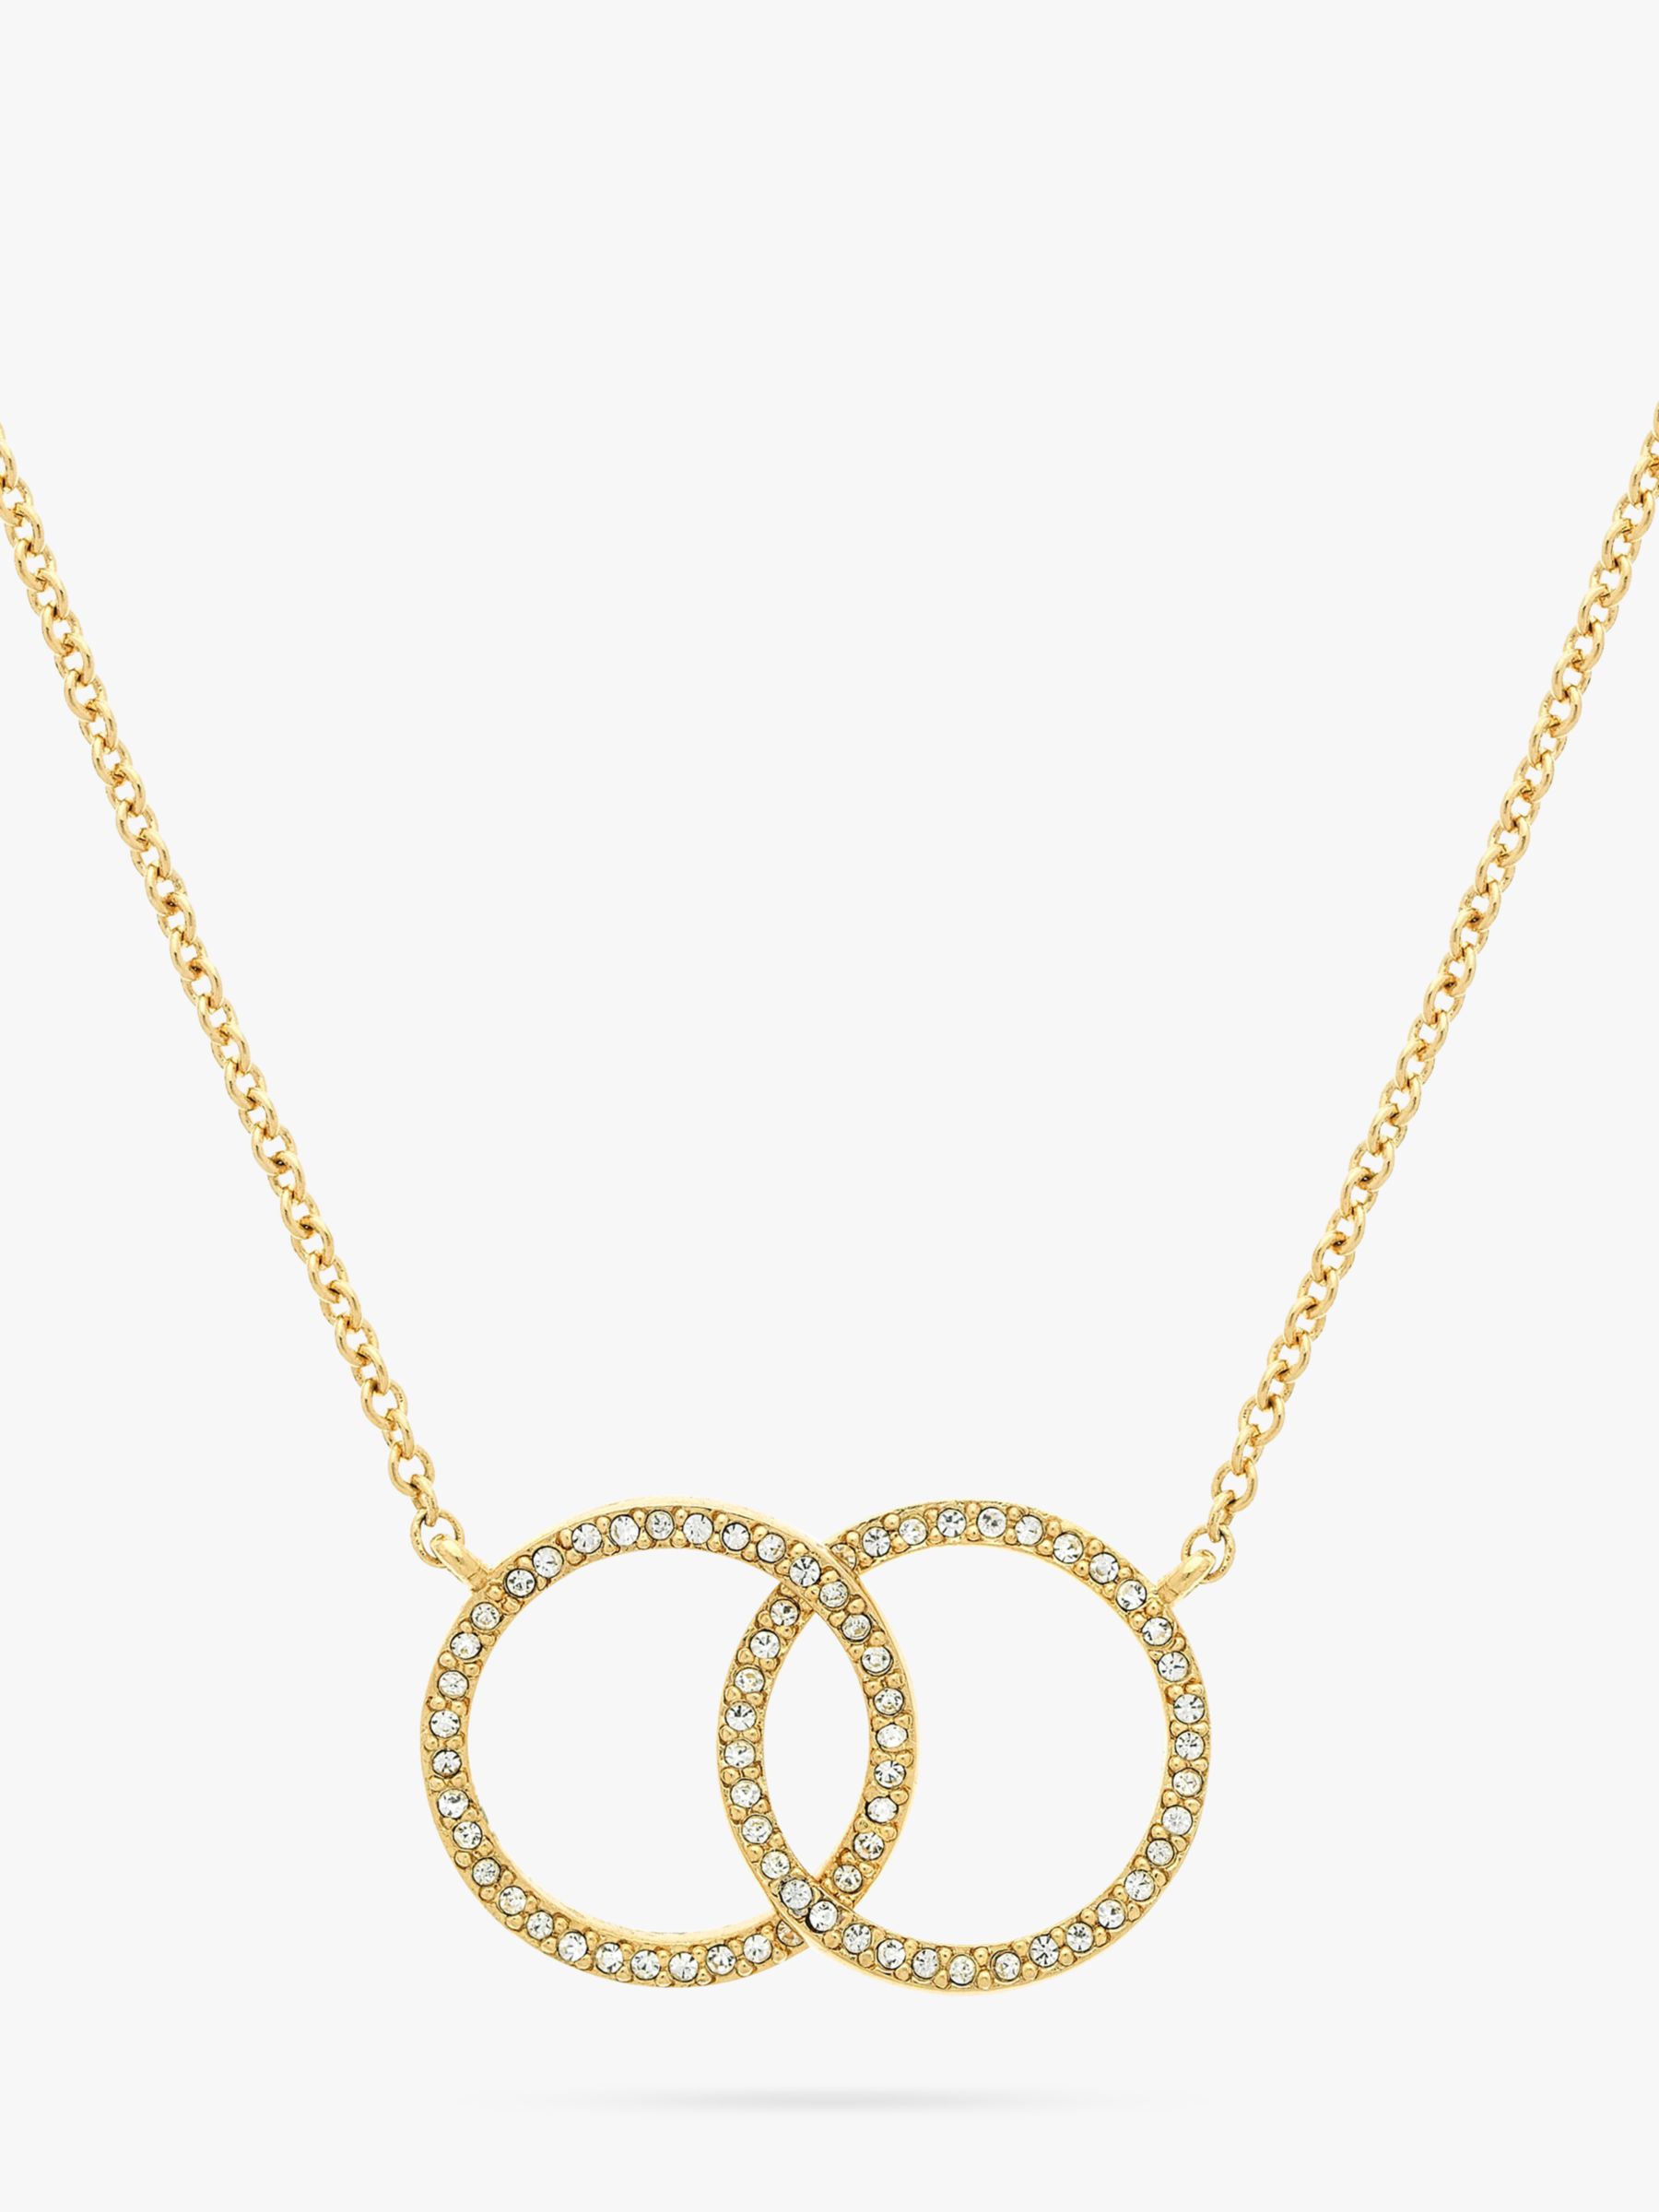 Melissa Odabash Gold & Crystal Double Hoop Necklace, Gold